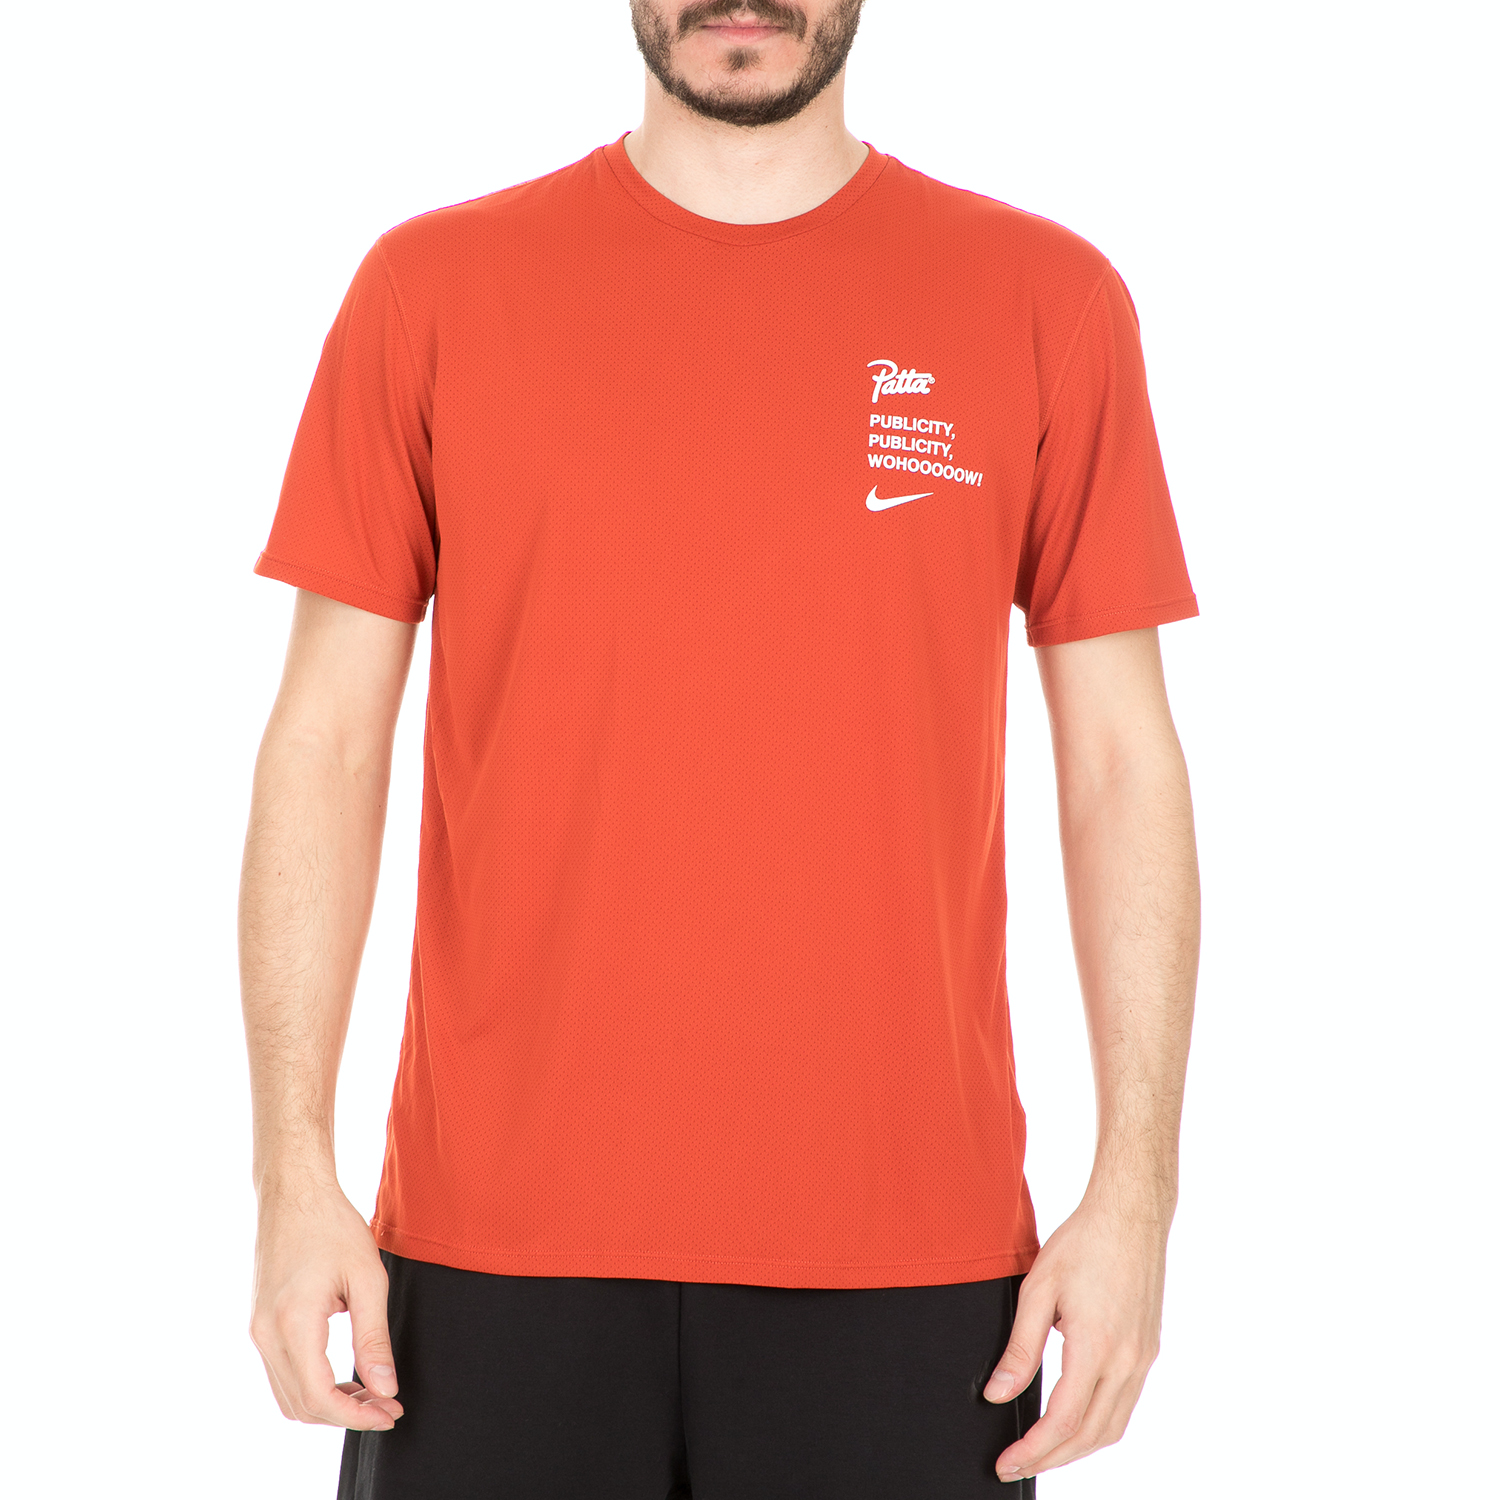 NIKE - Ανδρικό t-shirt NIKE NRG X PATTA TOP πορτοκαλί Ανδρικά/Ρούχα/Αθλητικά/T-shirt